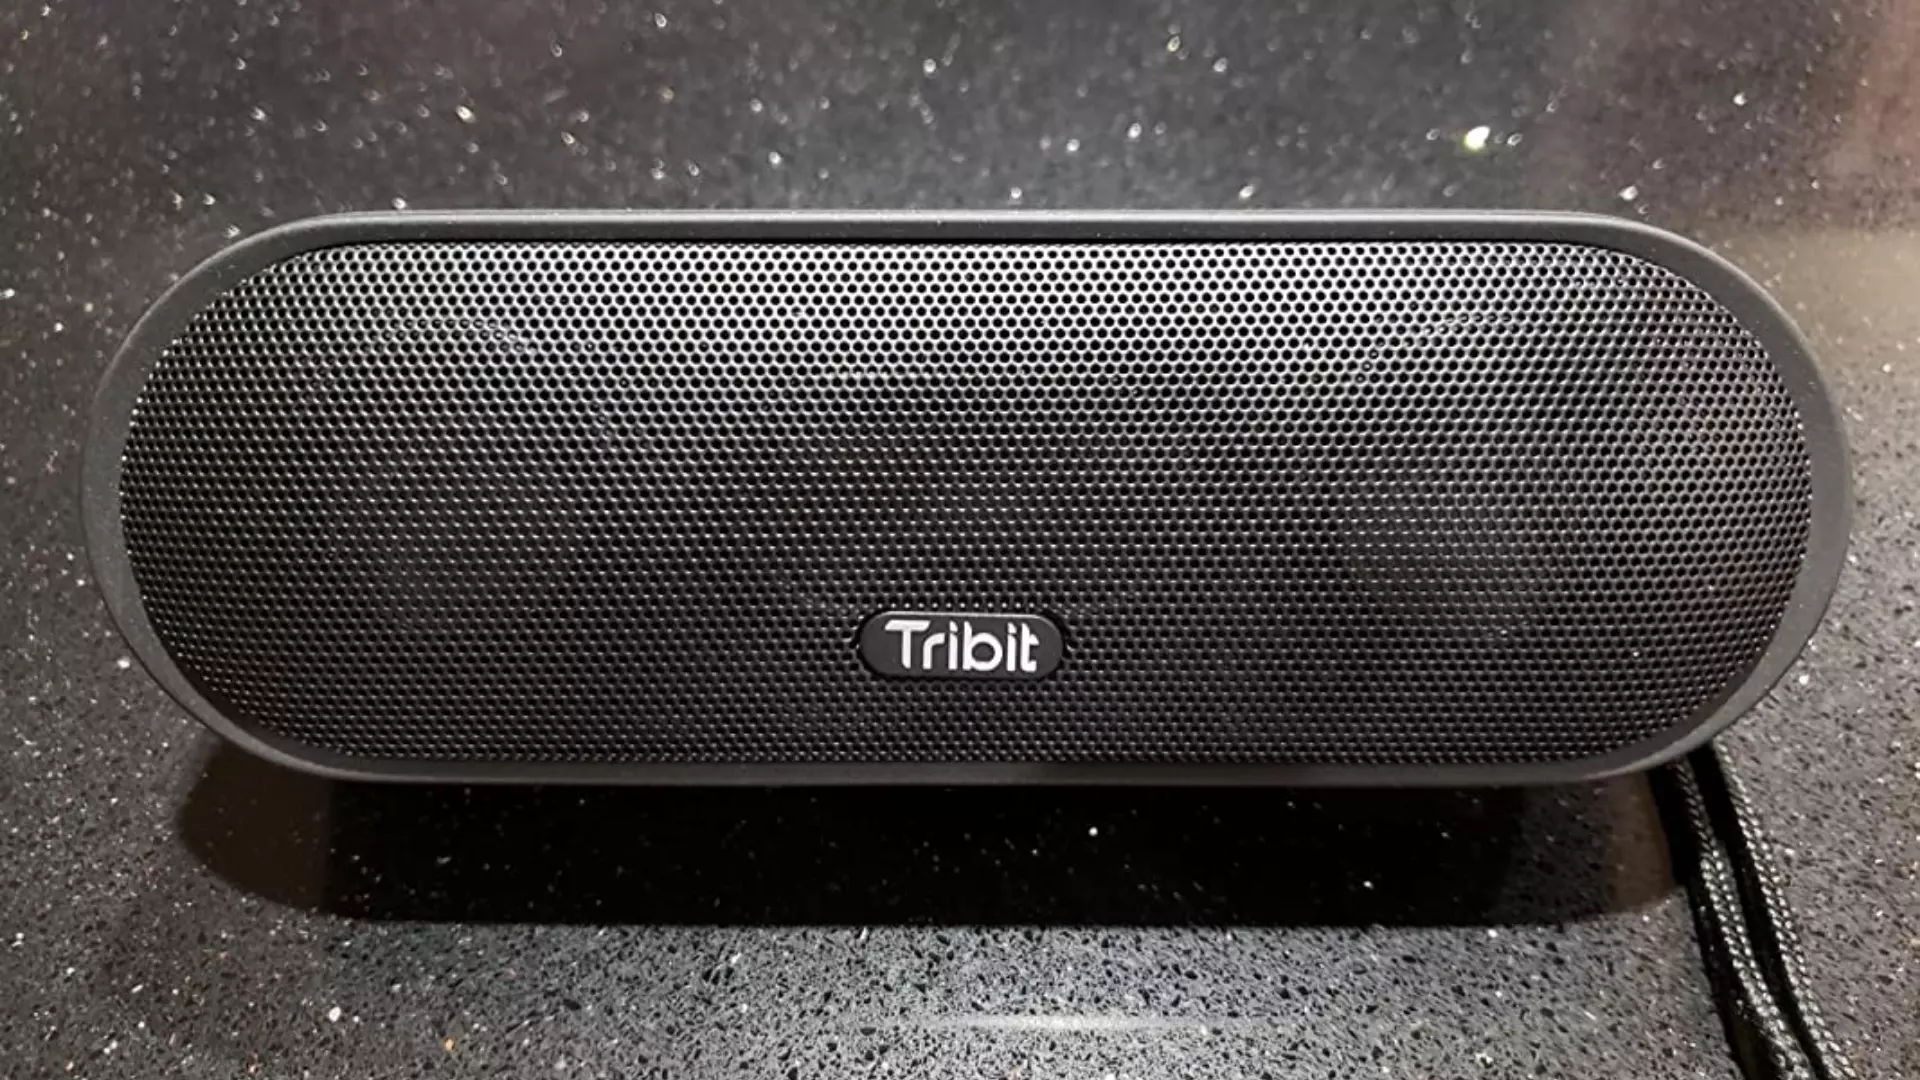 Tribit MaxSound Plus Portable Bluetooth Speaker Review